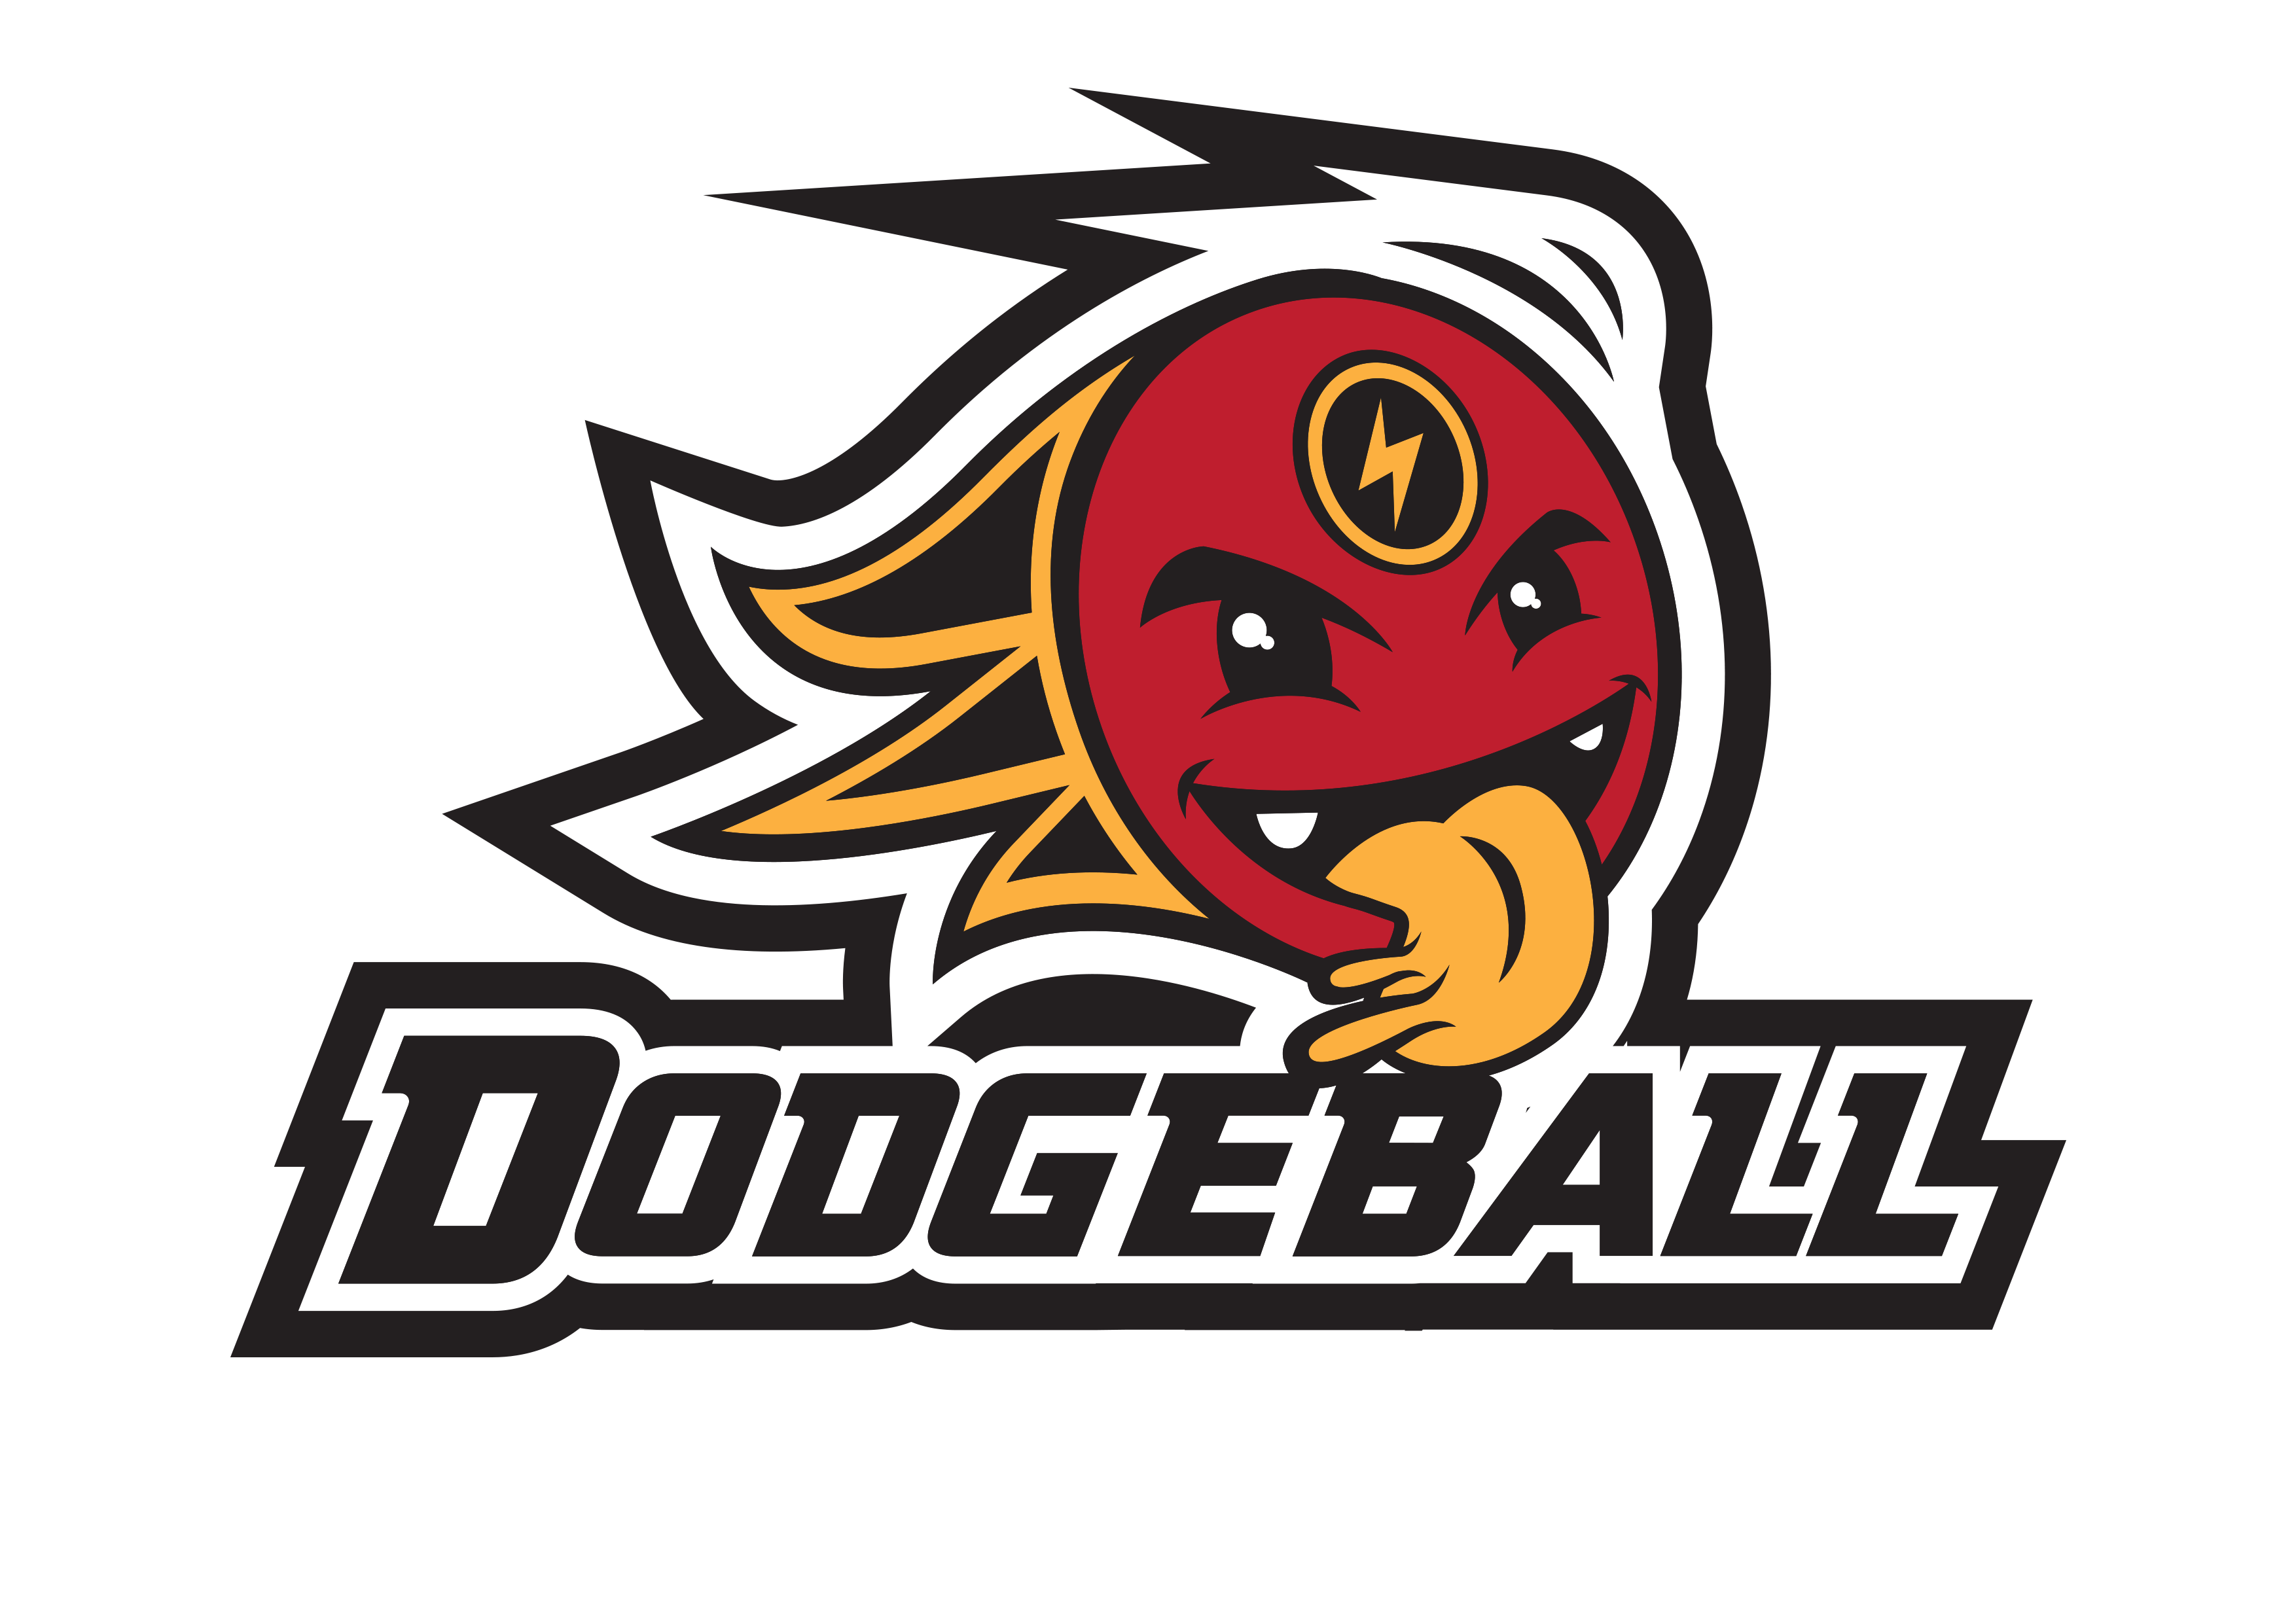 Dodgeball Logo 7 